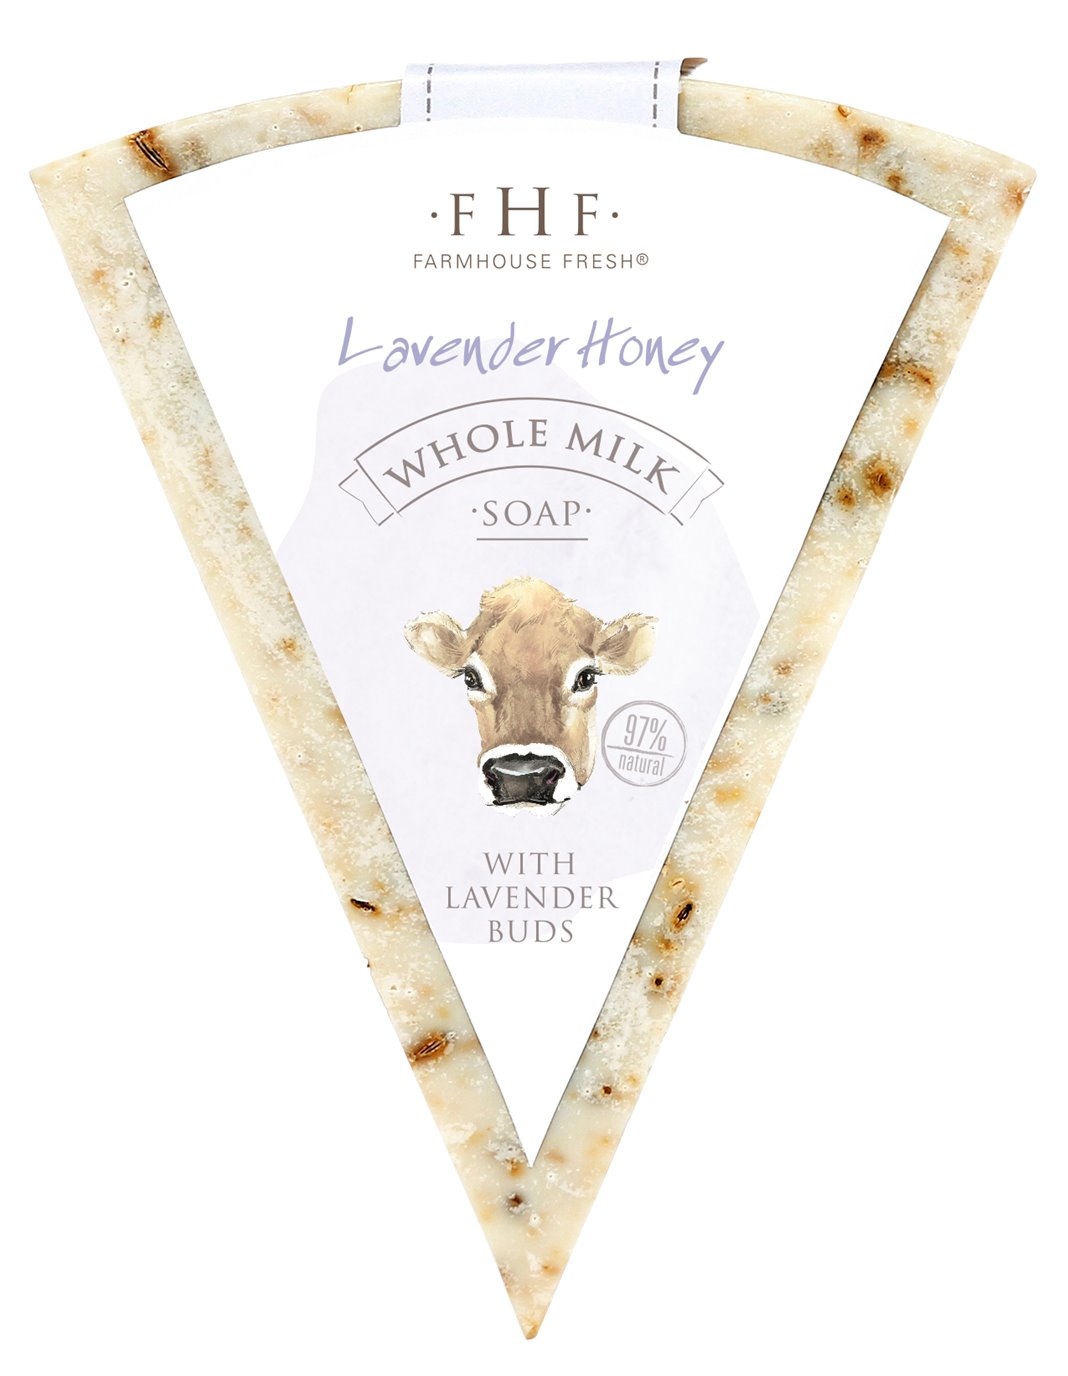 Farmhouse Fresh Lavender Honey Whole Milk Bar Soap